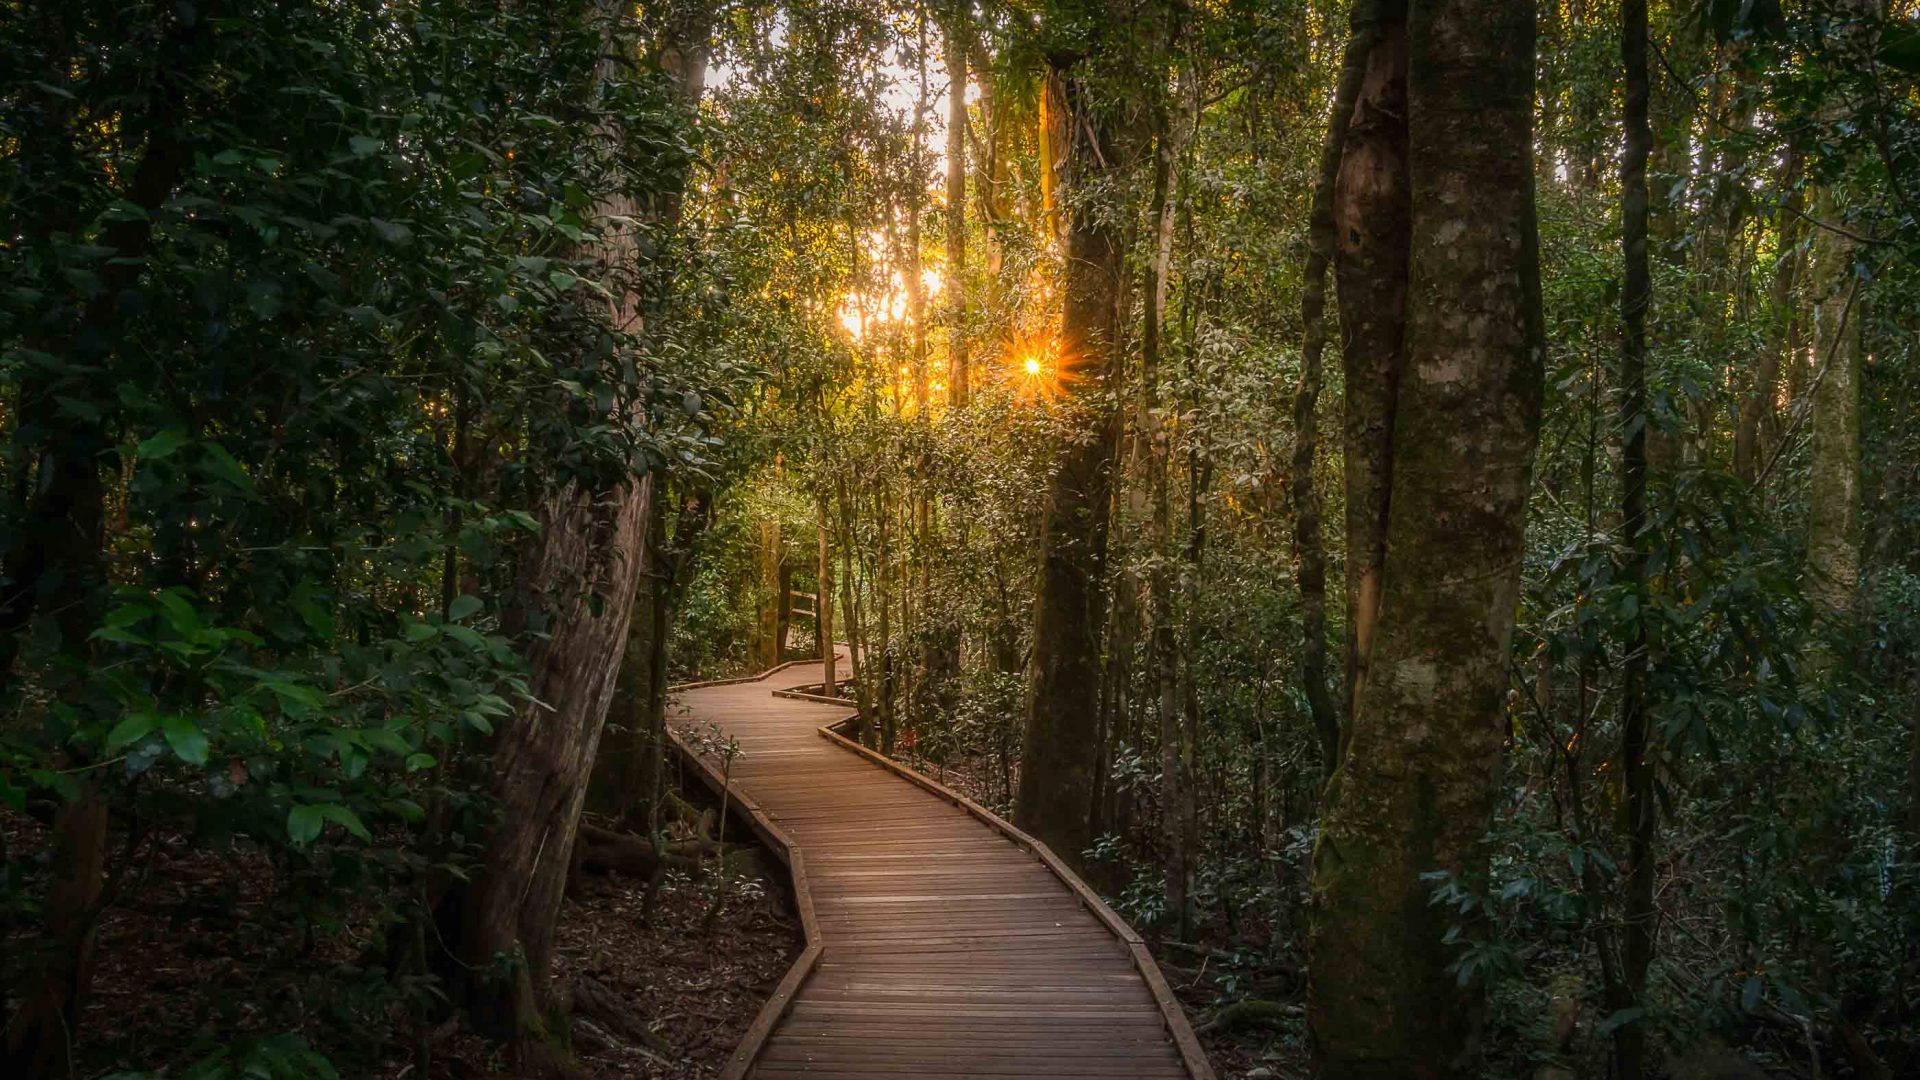 A boardwalk through the forest.